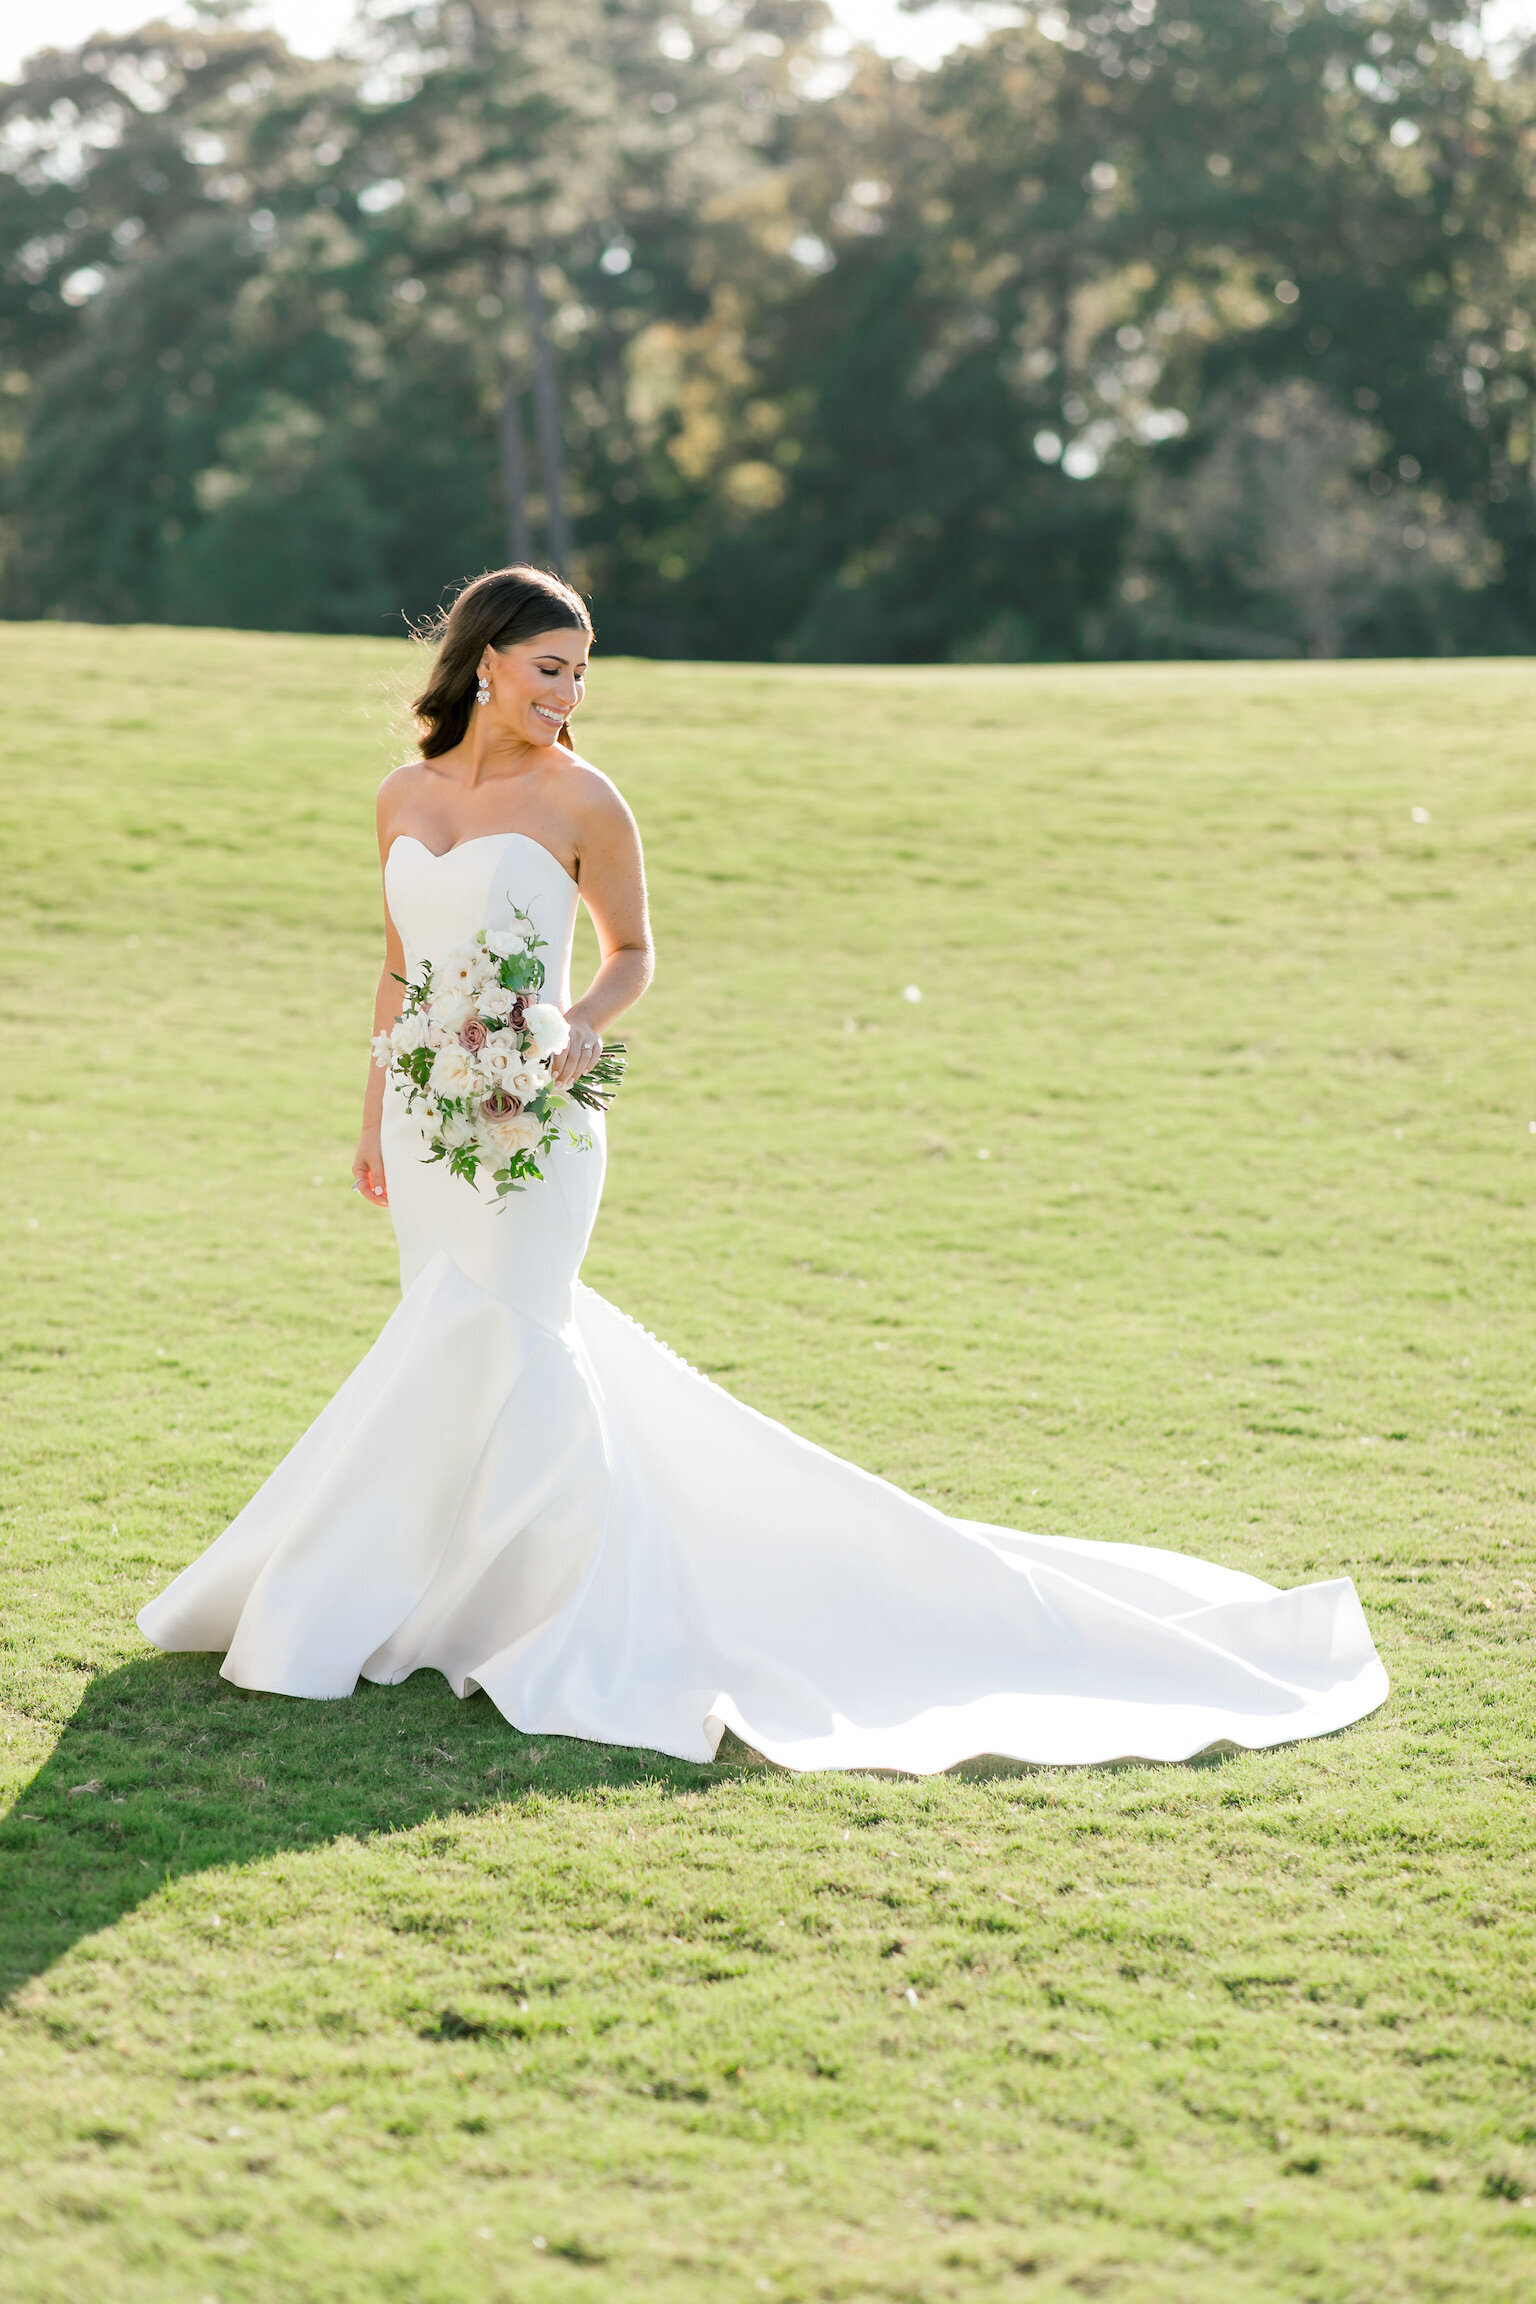 Chesapeake Virginia Wedding and Event Planner - Hannah Hildebrandt Events - Best Wedding Planner in Chesapeake, Virginia and North Carolina - 6